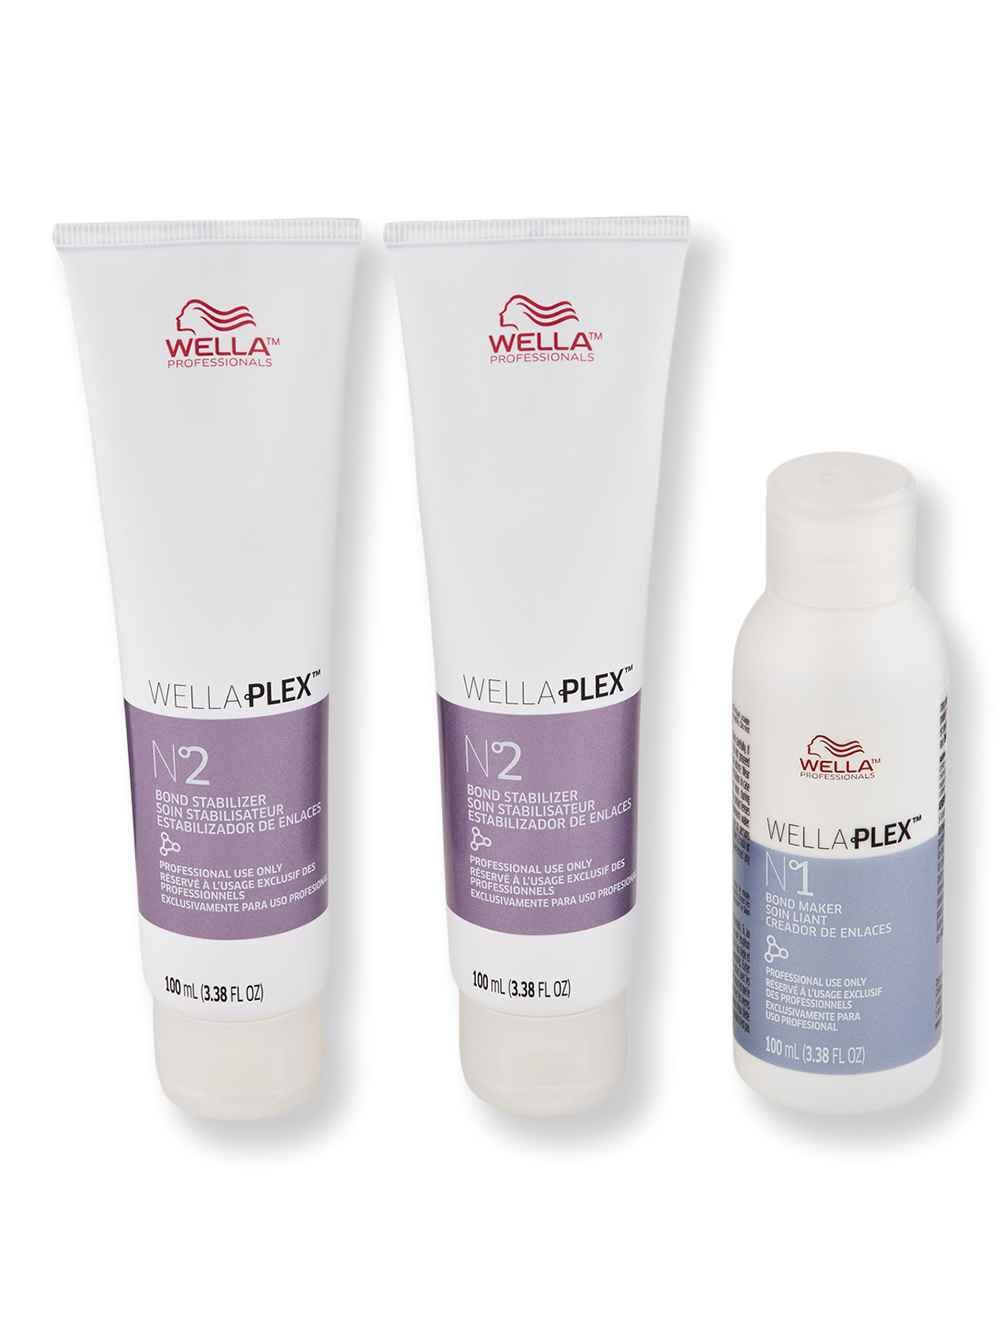 Wella Wella Wellaplex Small Kit Step 1+2 ESF 3.38 oz 3 ct Hair Color 